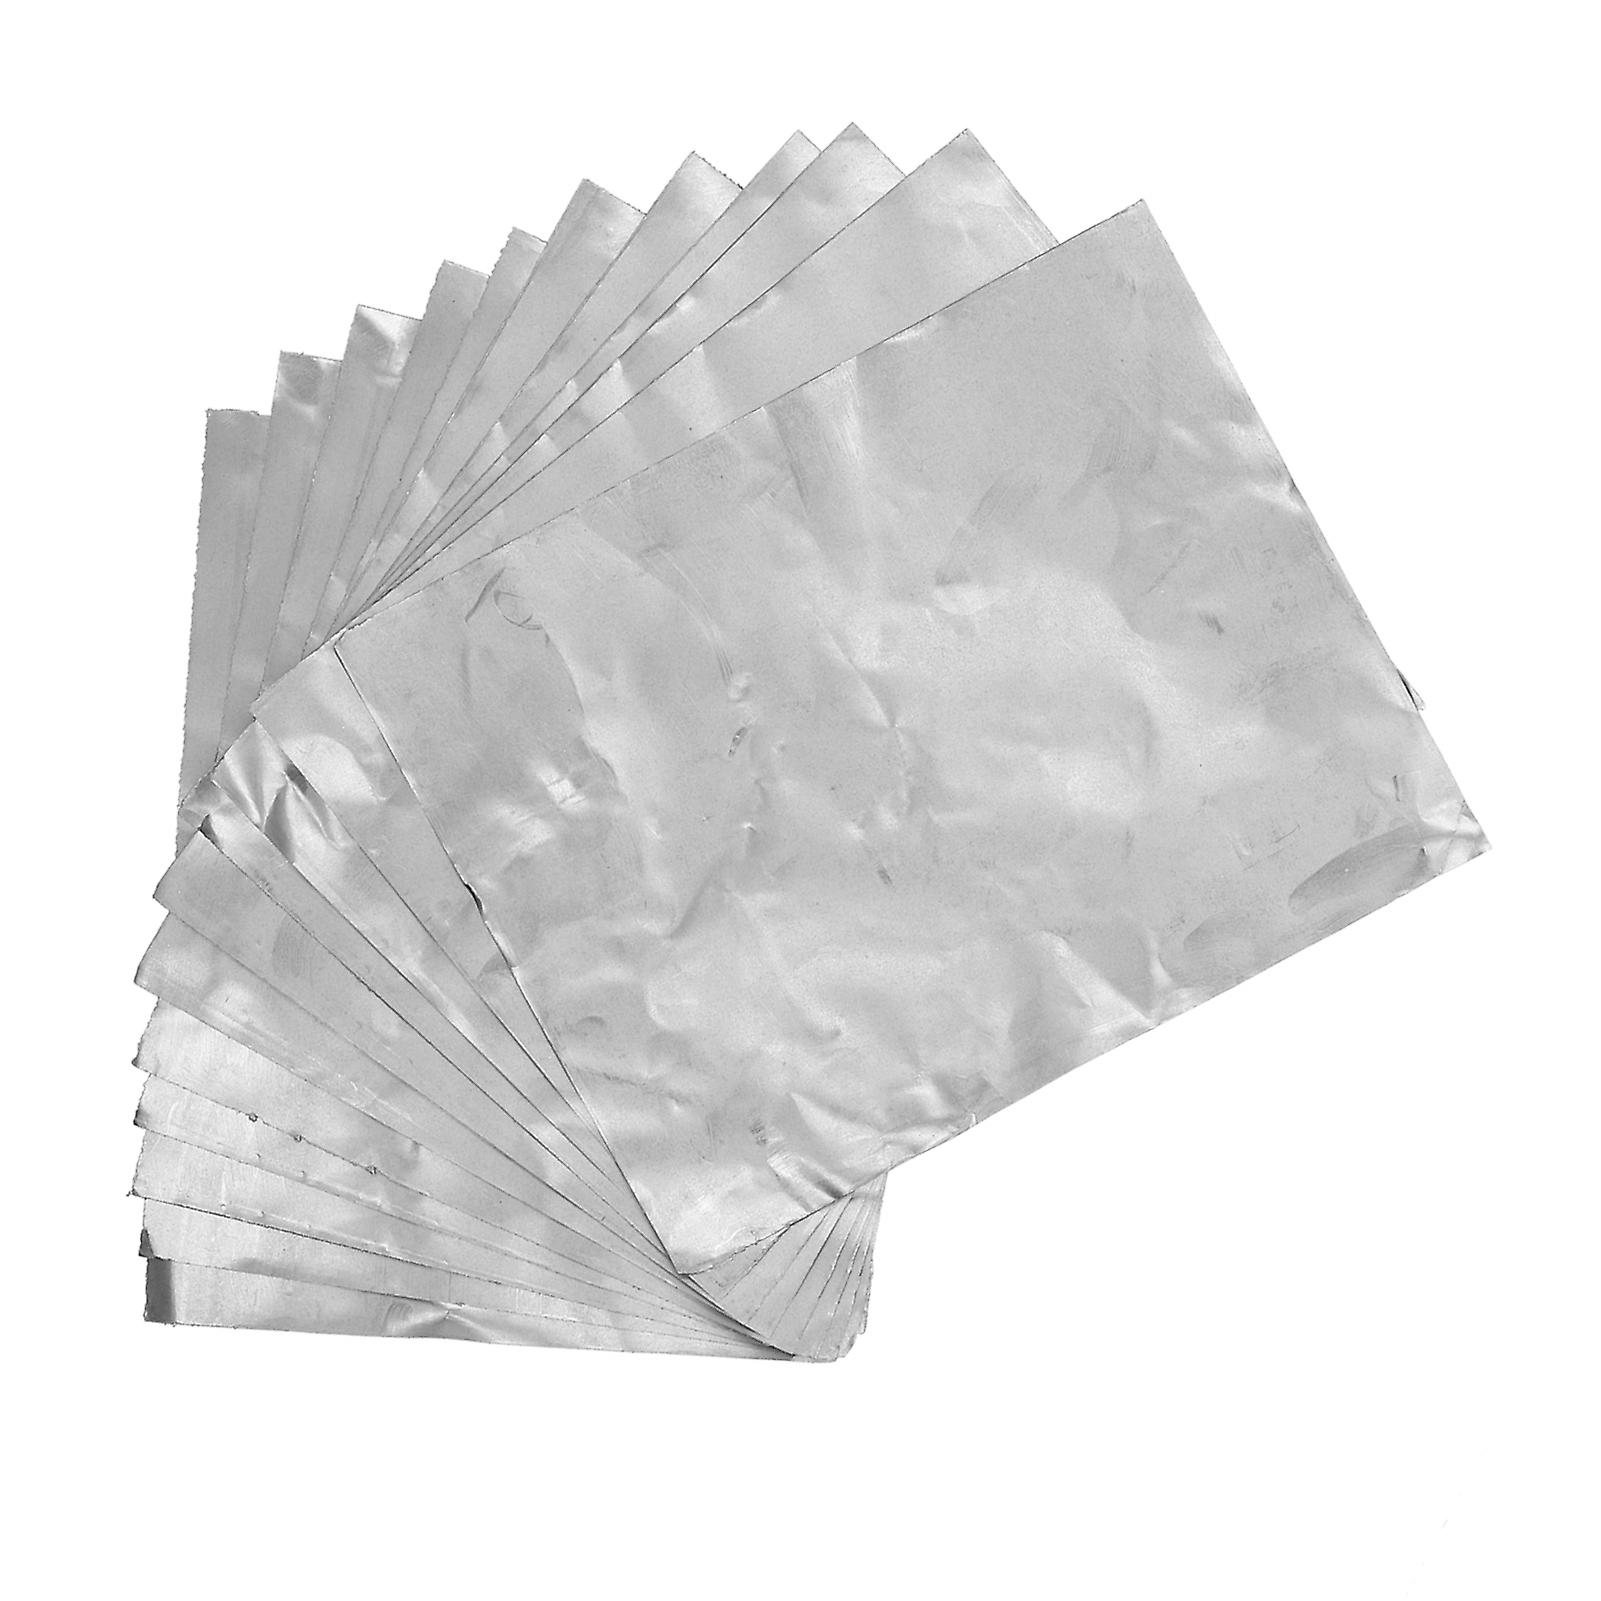 10pcs Graphite Foil Flexible Paper Gasket Sheet Industrial Motor Pipe Valve Sealing Supplies250x200x0.05mm